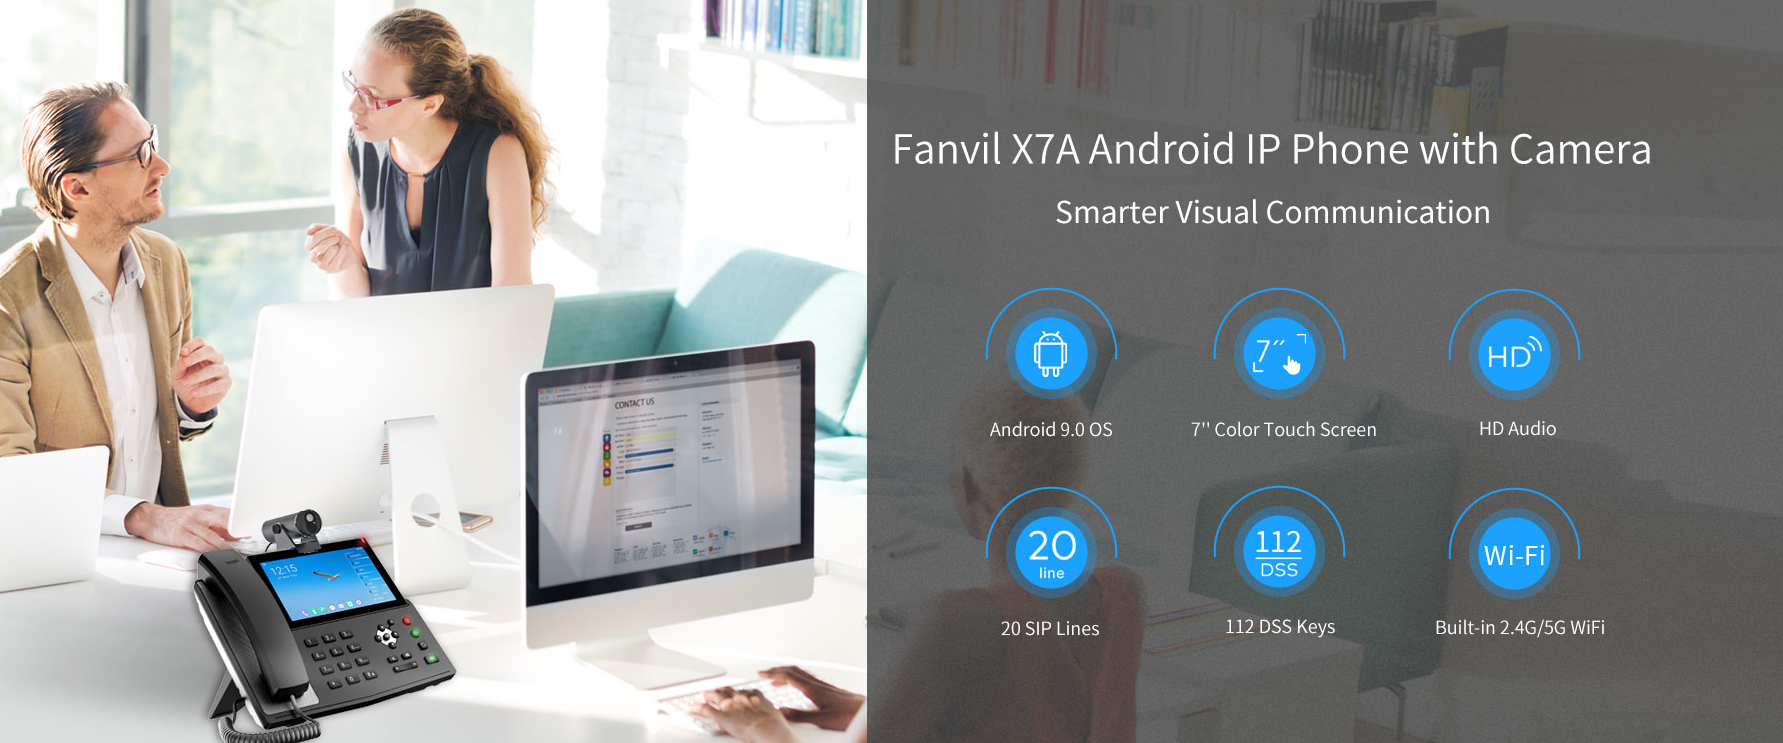 Fanvil X7A Android IP Phone with Camera - Fanvil Hong Kong - 香港代理